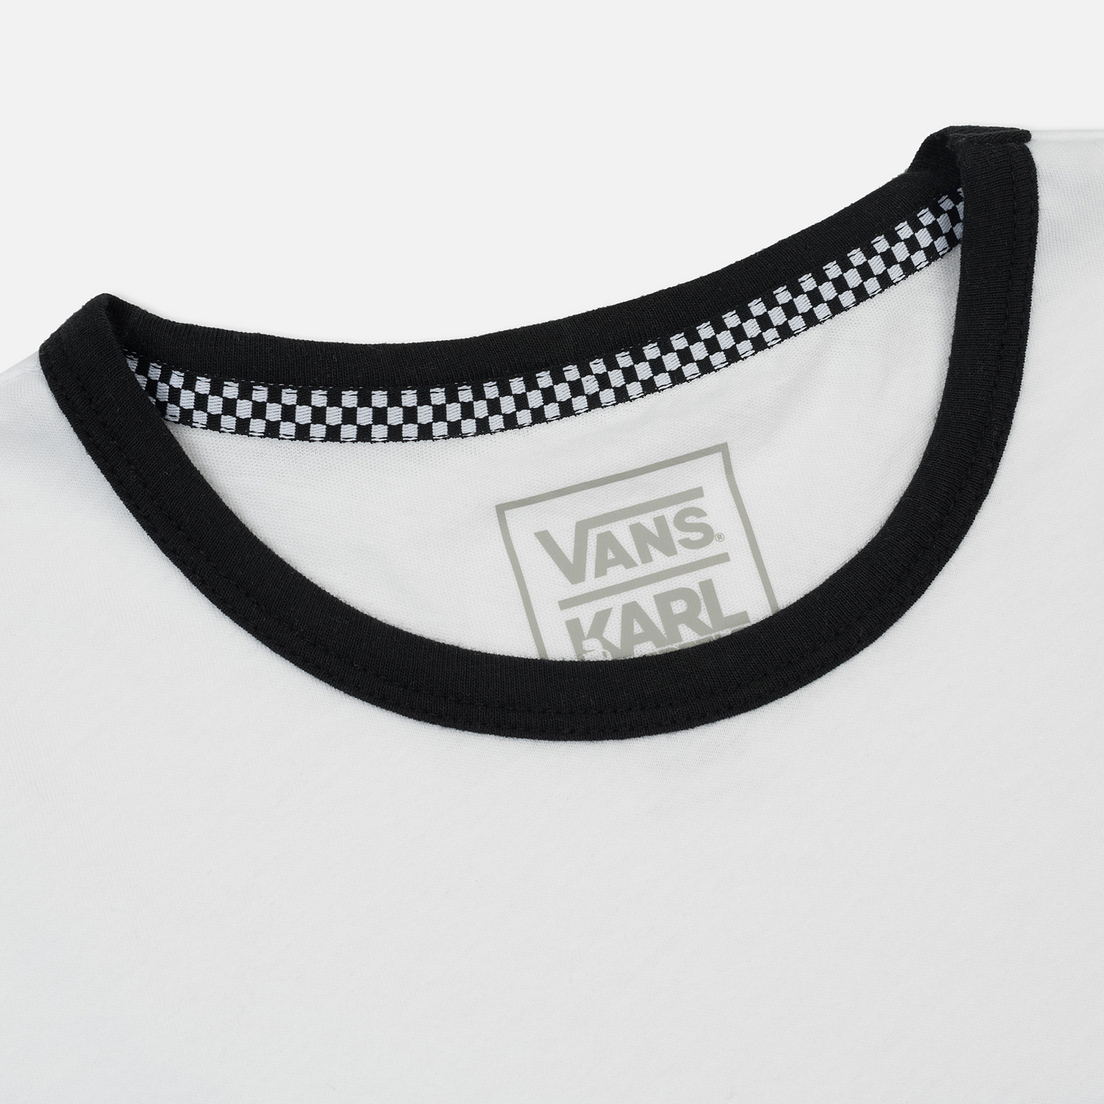 Vans Женская футболка x Karl Lagerfeld Ringer